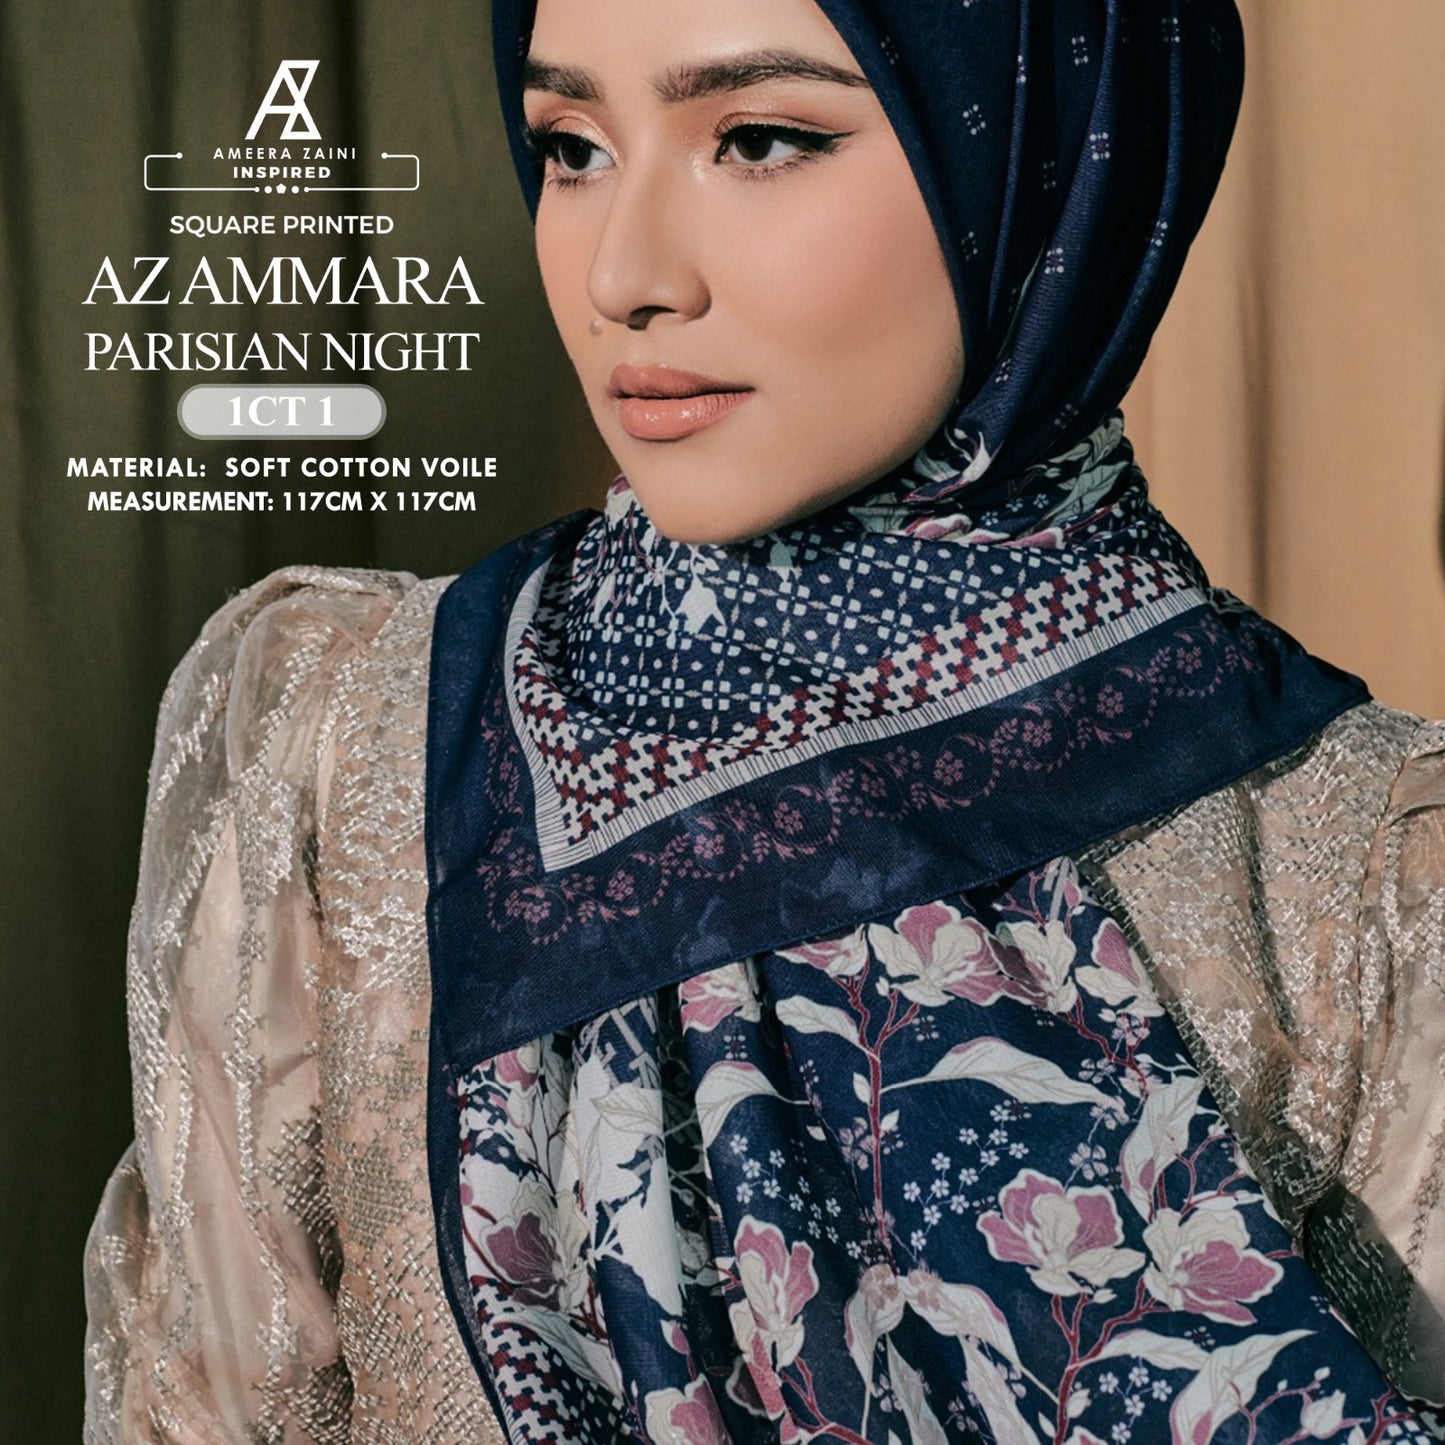 Ameera Zaini Inspired AZ AMMARA Solf Cotton Voile Printed SQ Collection